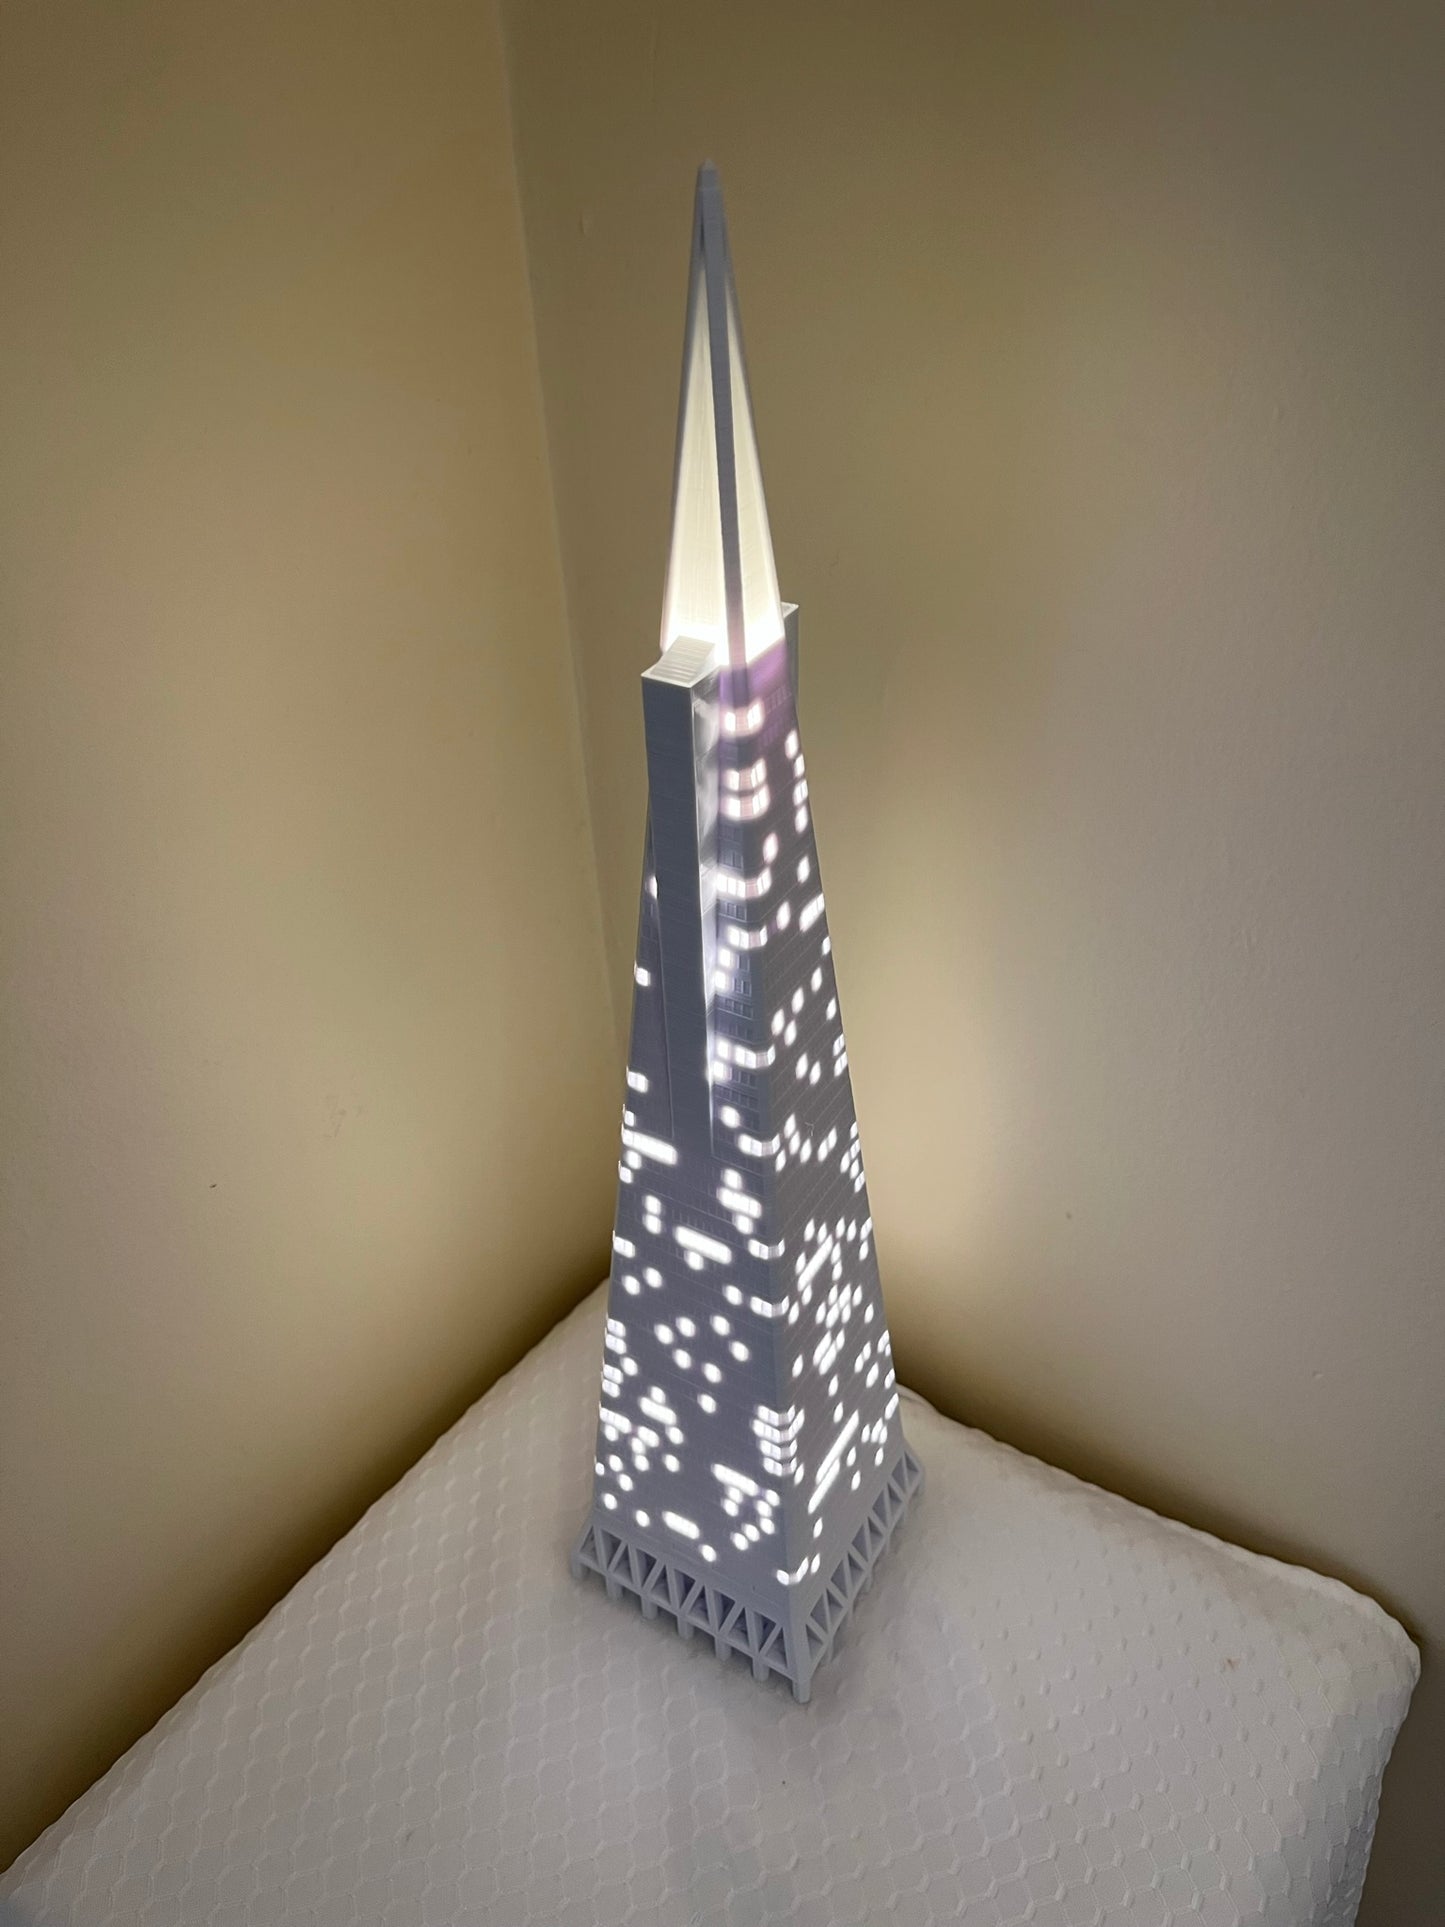 Transamerica Pyramid Light Up Model- 3D Printed (First Edition)